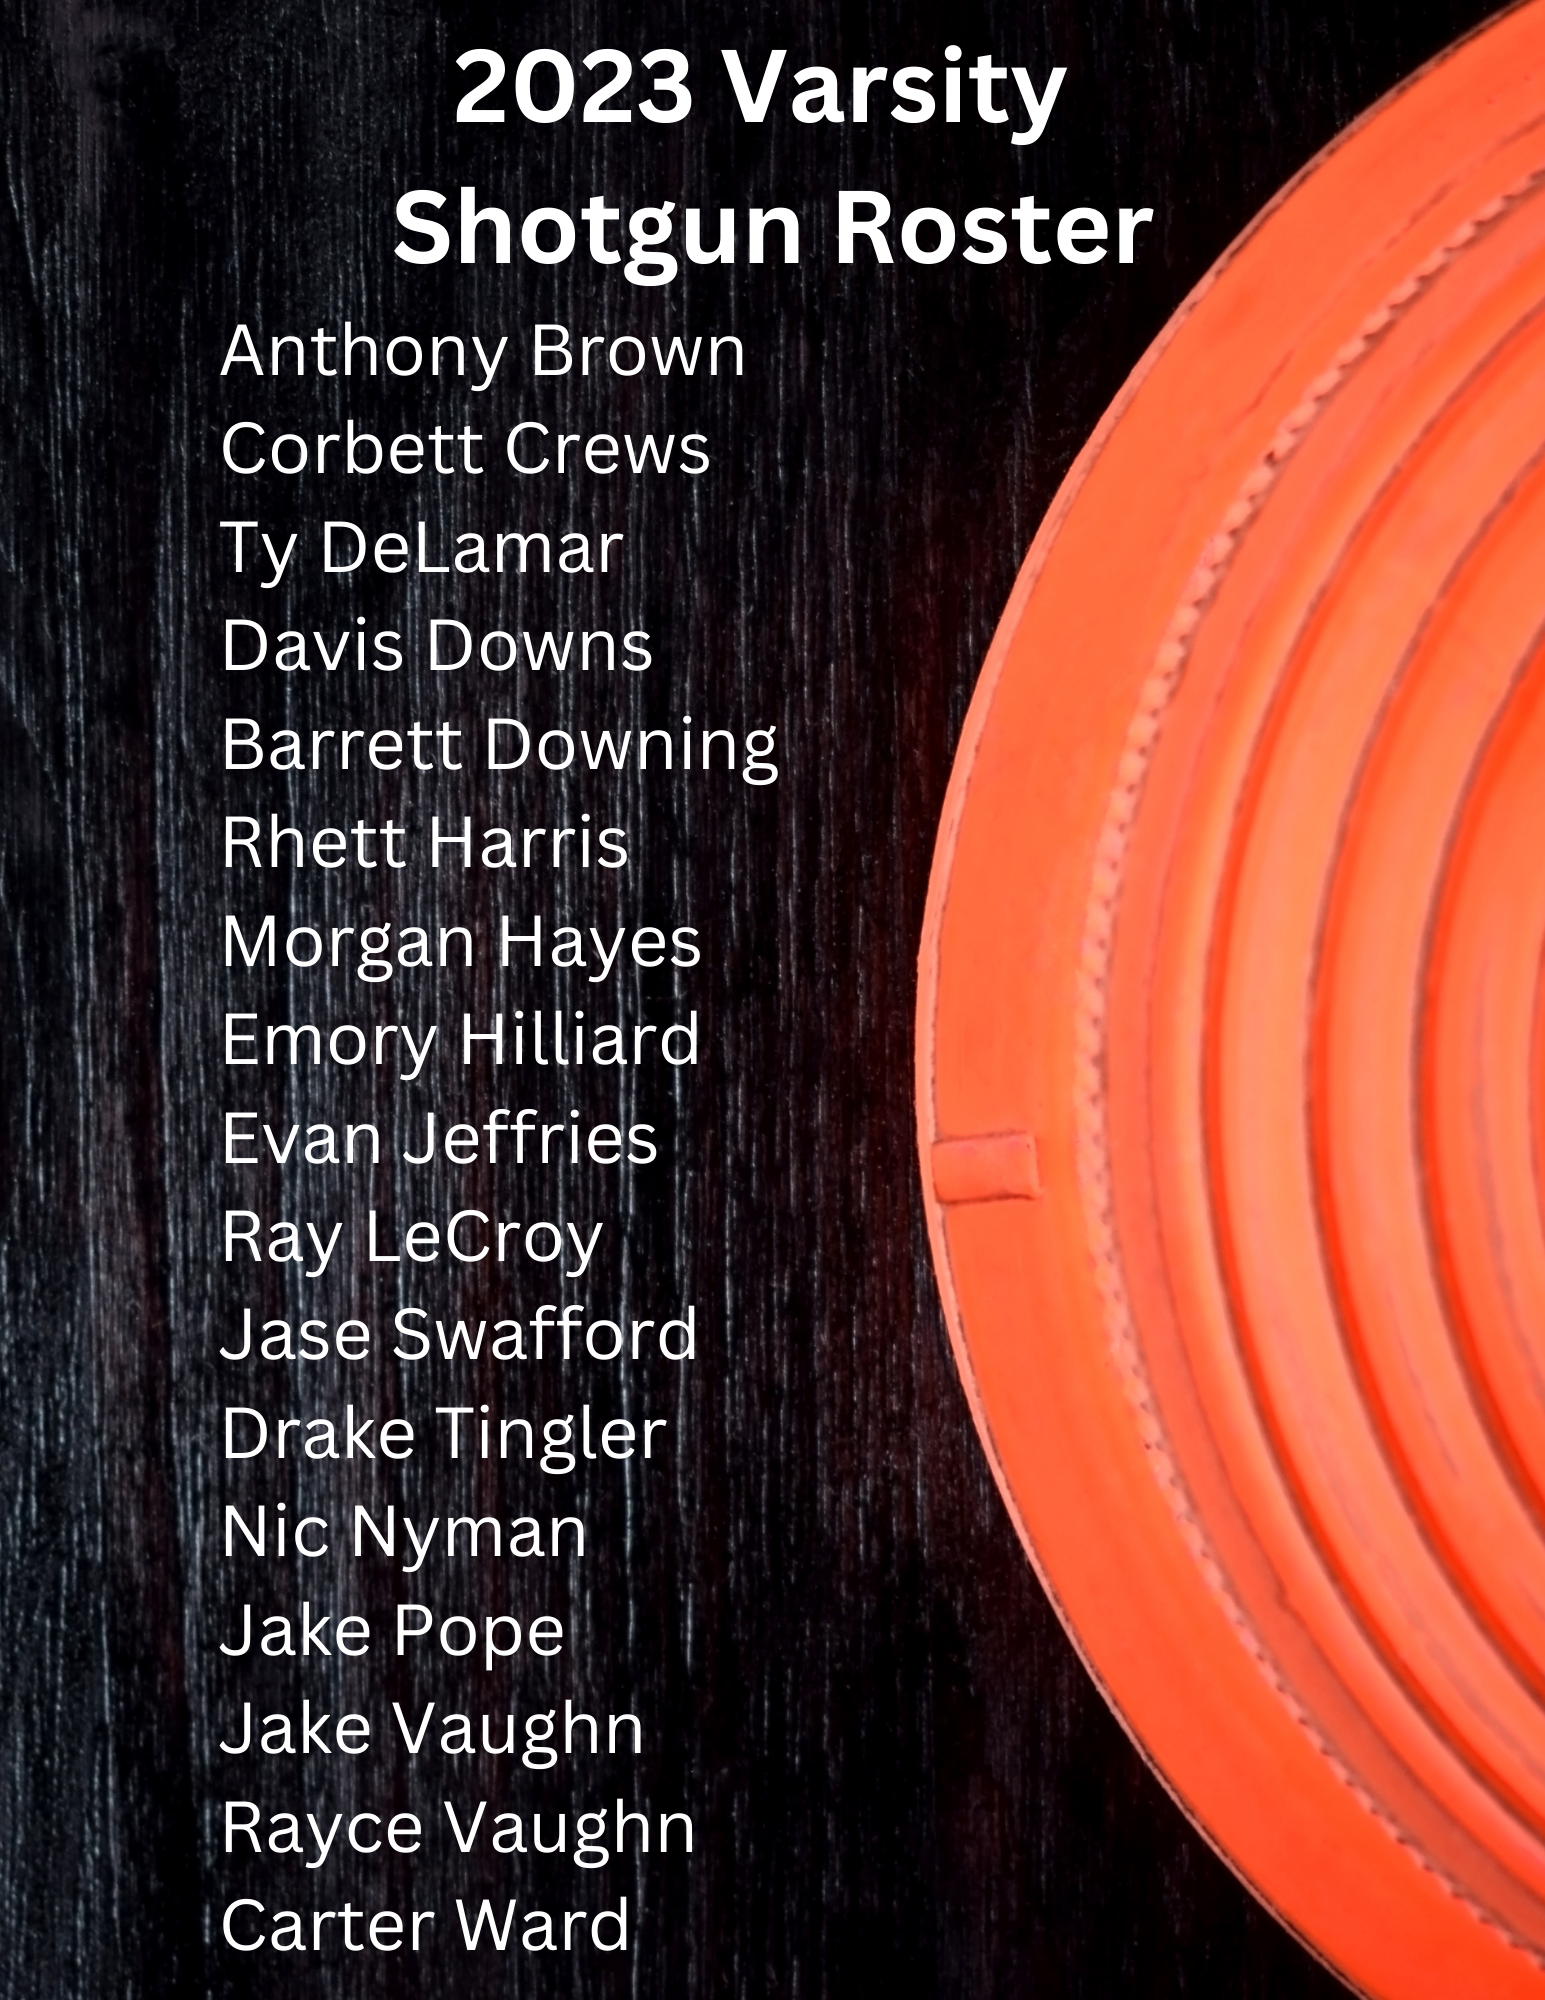 Varsity shotgun roster